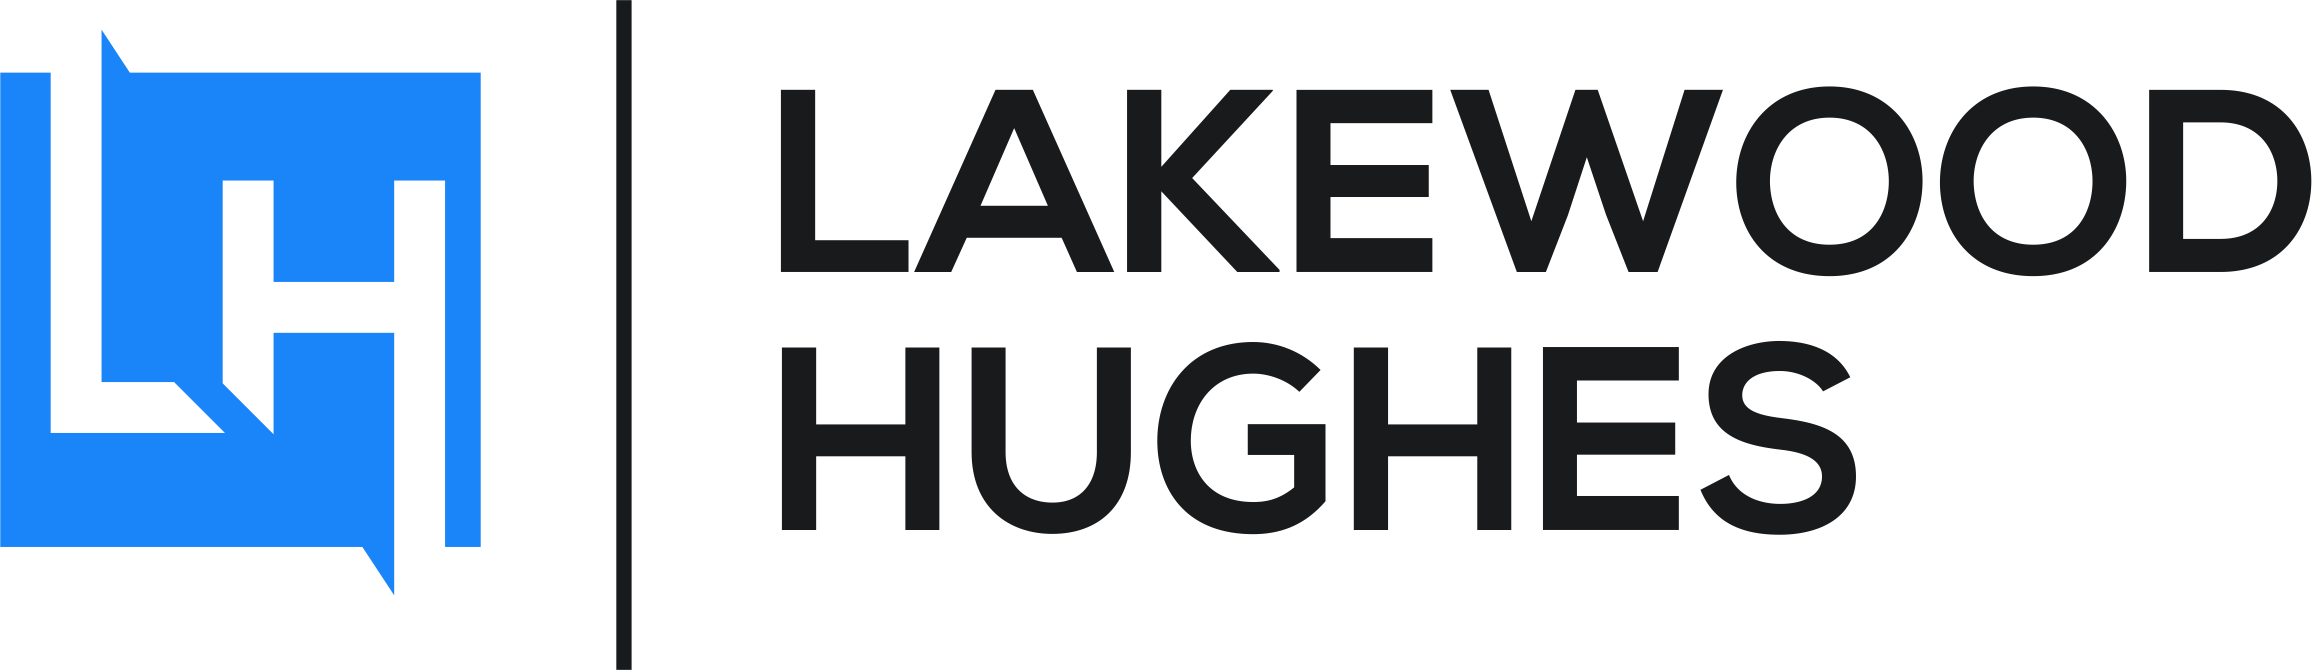 Lakewood Hughes